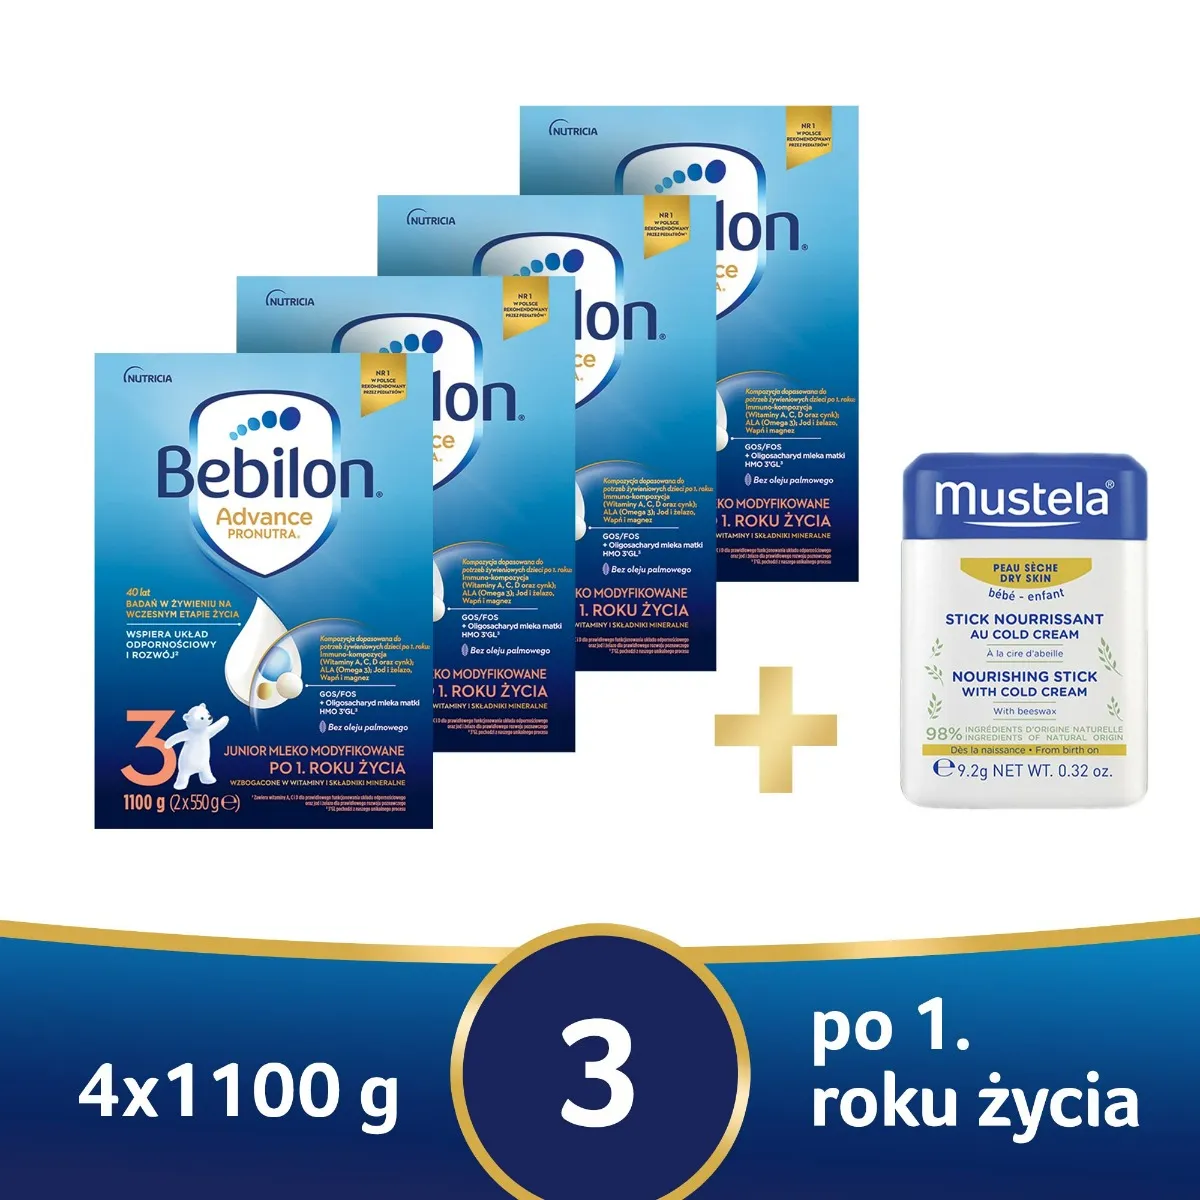 Bebilon 3 Pronutra Advance, mleko modyfikowane po 1. roku życia, 4 x 1100 g + Mustela Bebe, sztyft ochronny z Cold Cream, 9,2 g